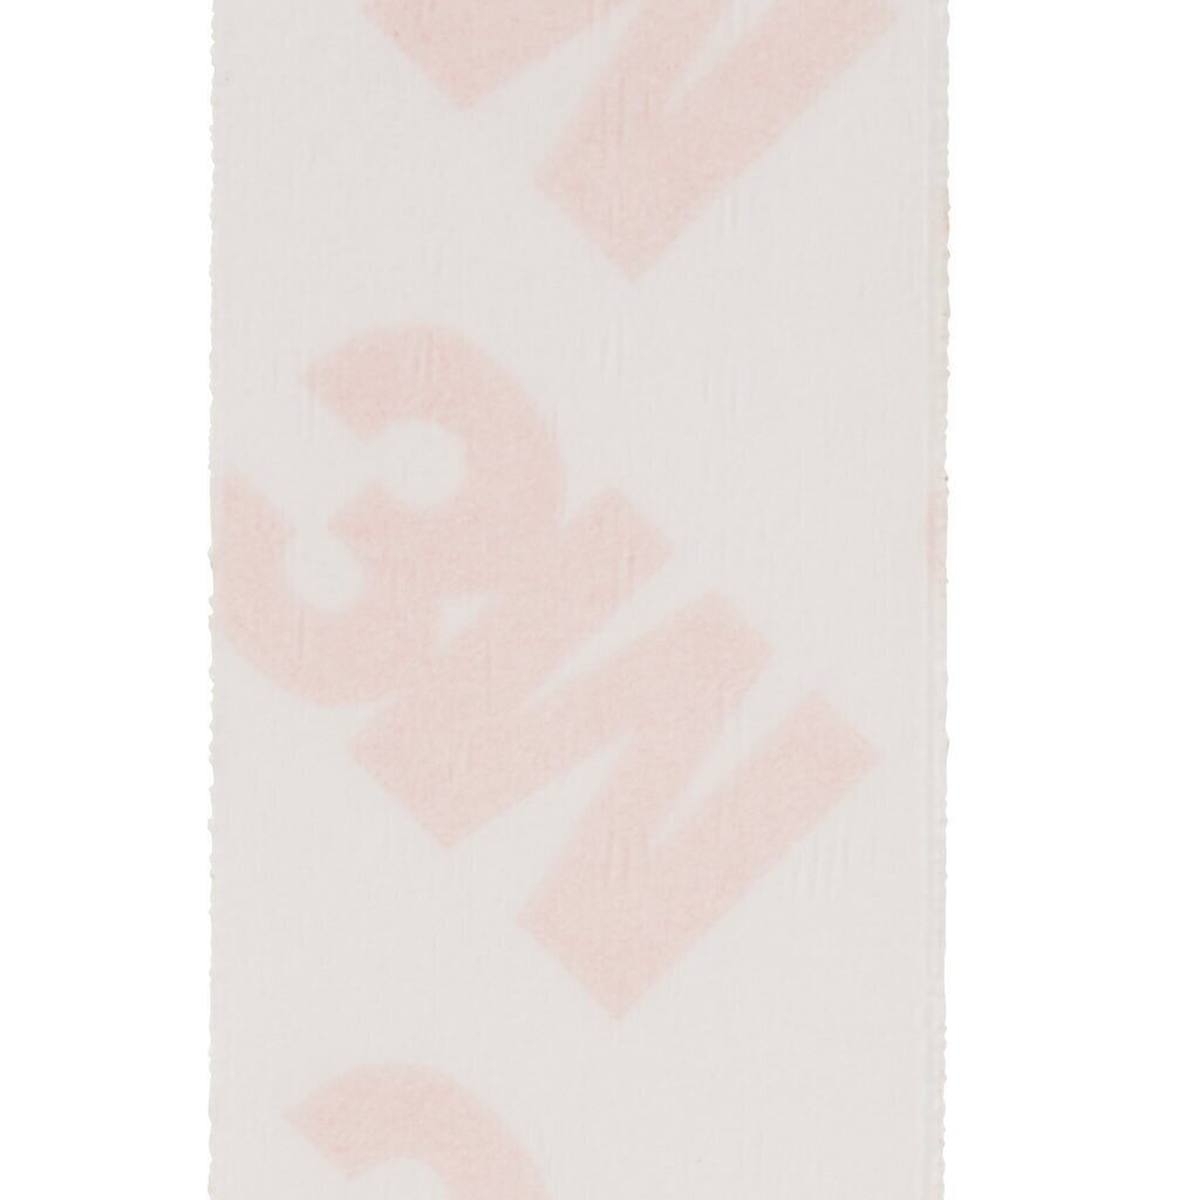 3M Dubbelzijdig plakband met polyester achterkant 9088-200, transparant, 15 mm x 50 m, 0,2 mm